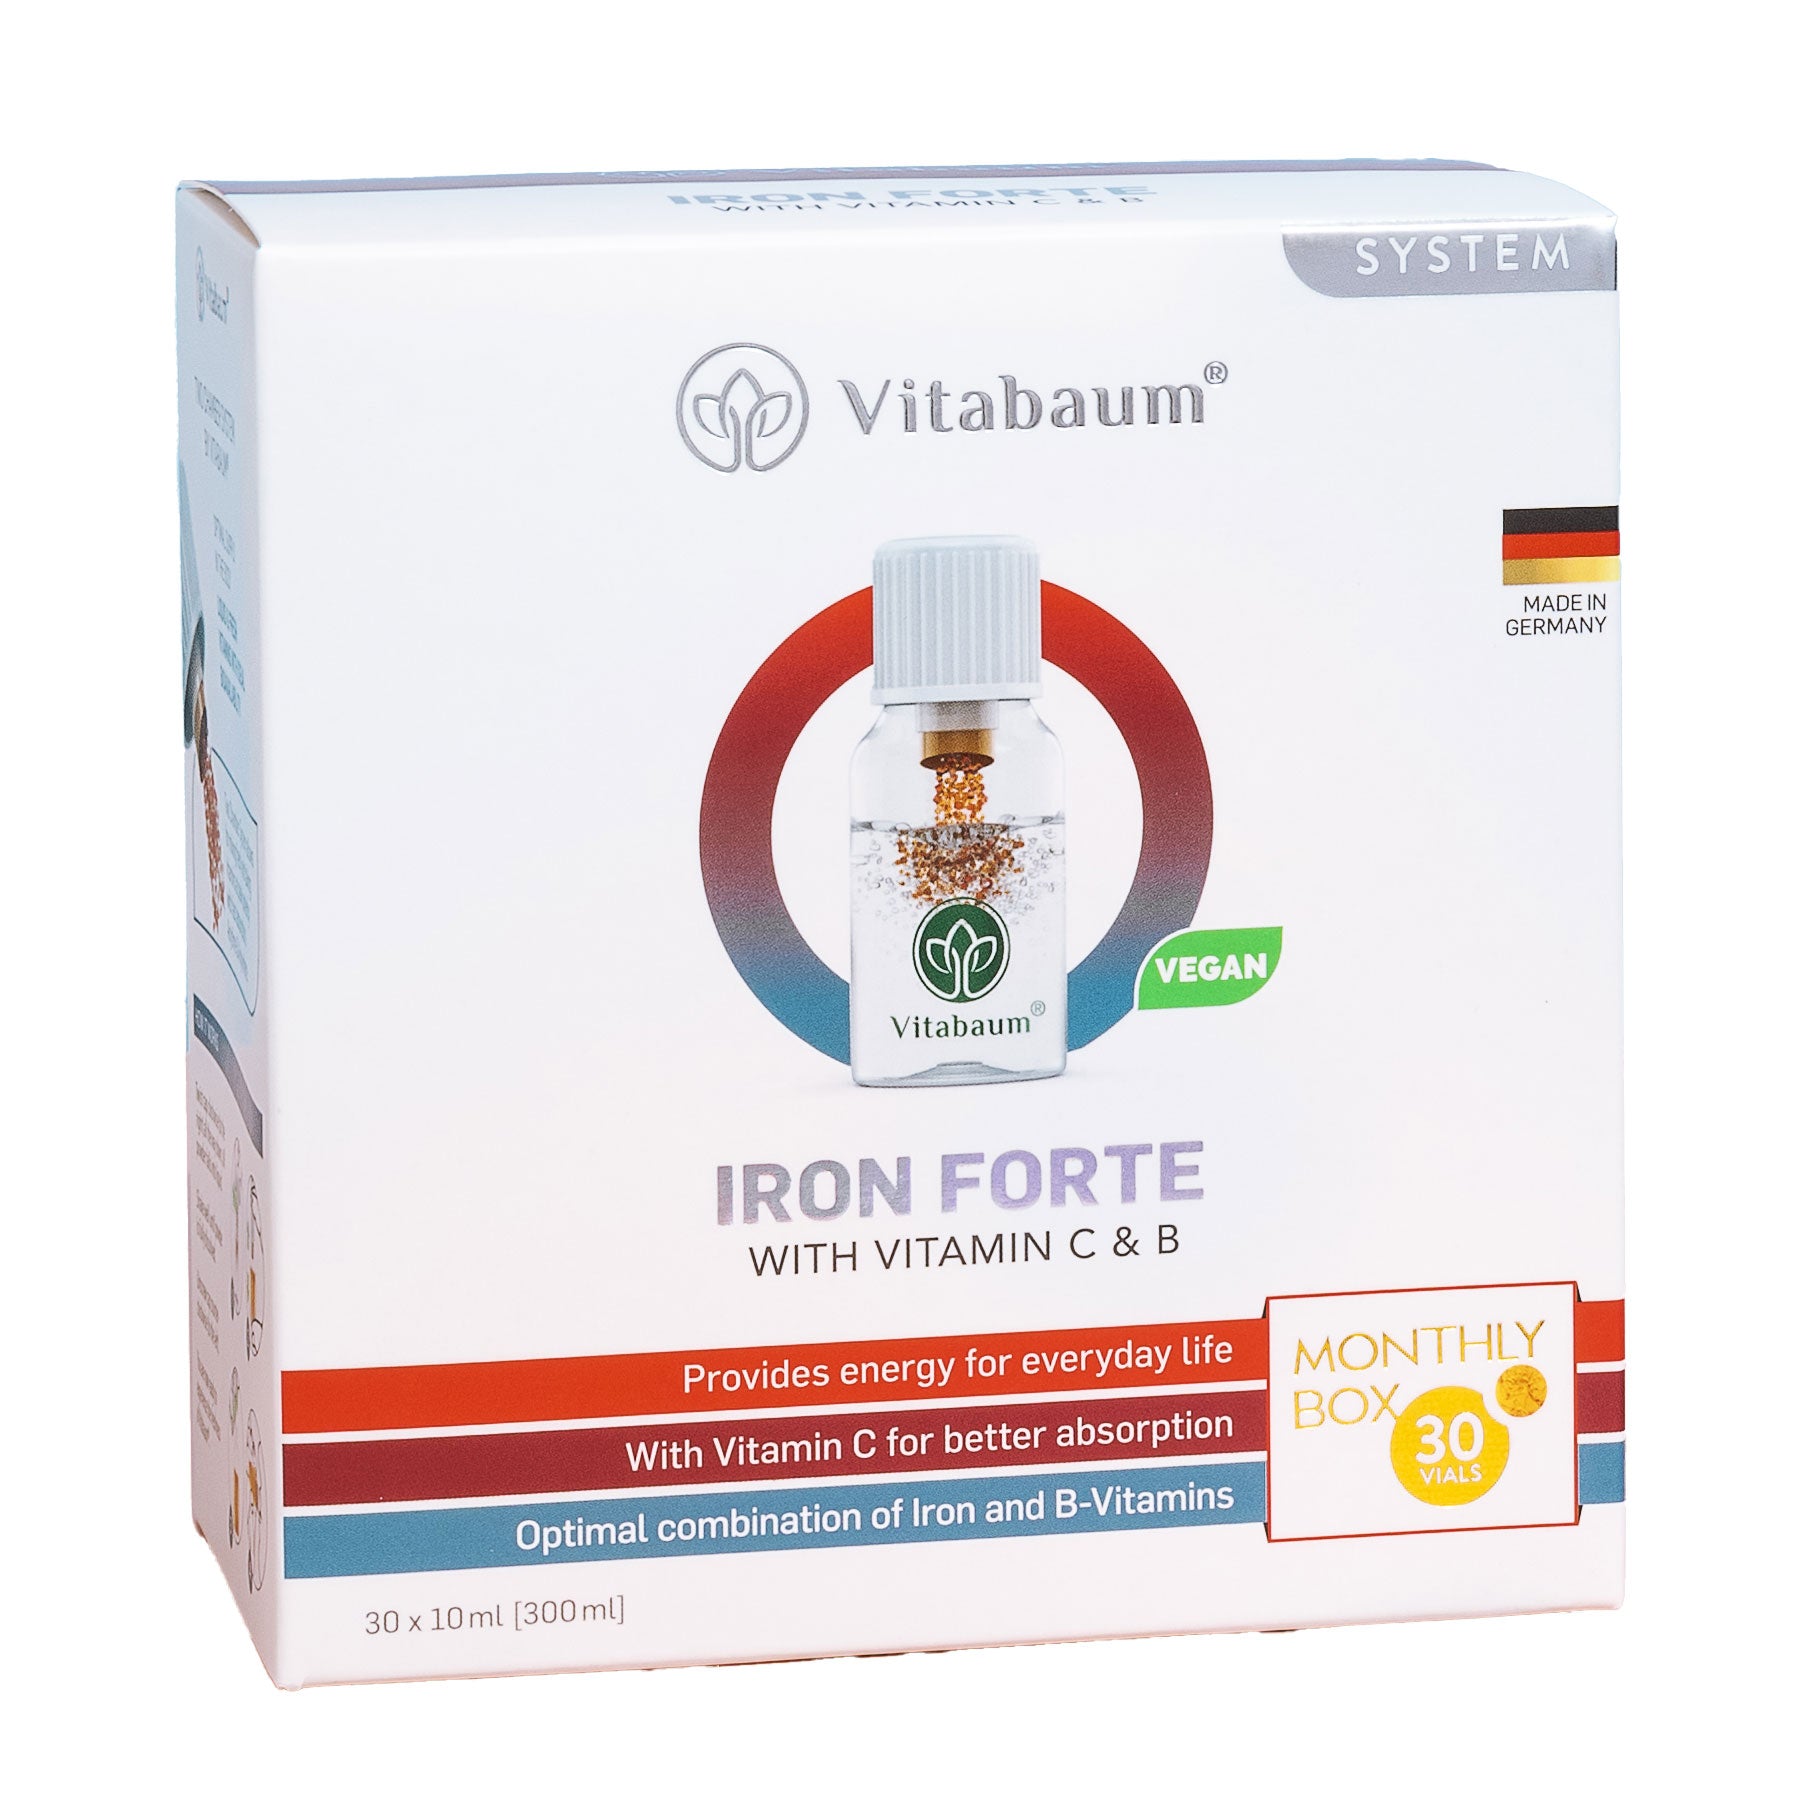 Iron Forte - with Vitamin C & B - Monthly supply - pack of 30 vials - 10ml - Vitabaum®